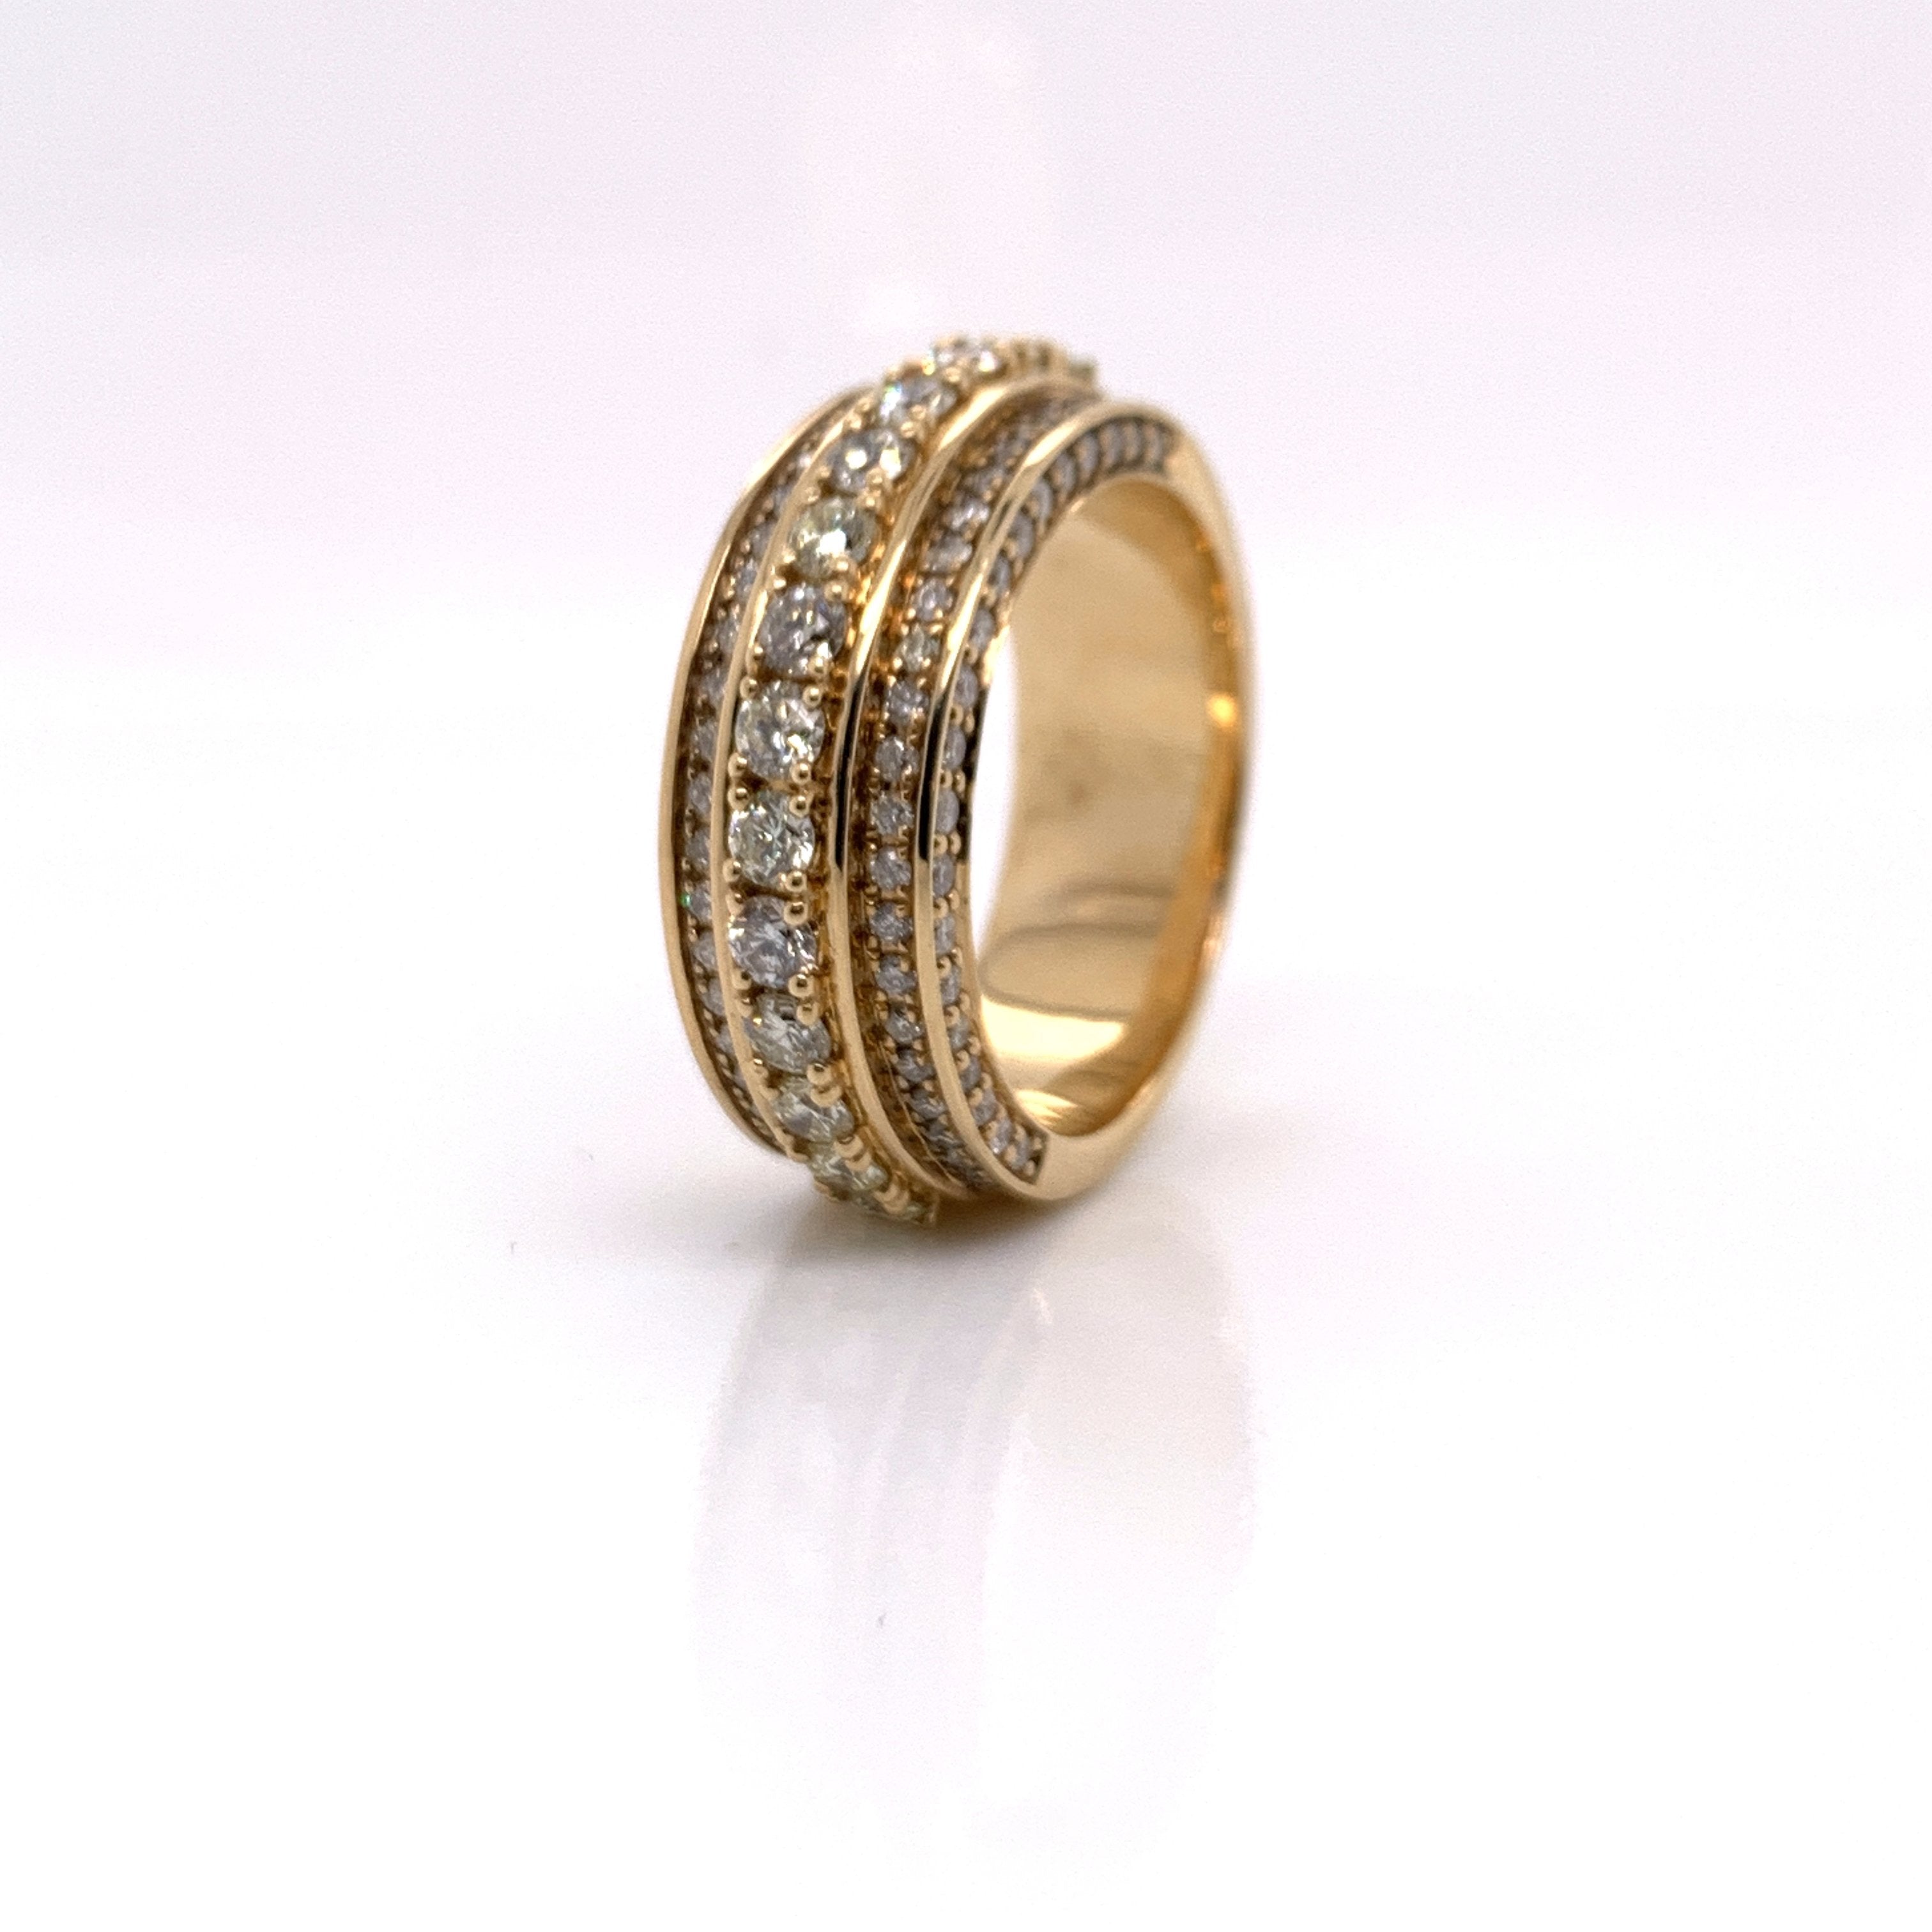 2.26 CT. Diamond Ring in 10K Gold - White Carat - USA & Canada